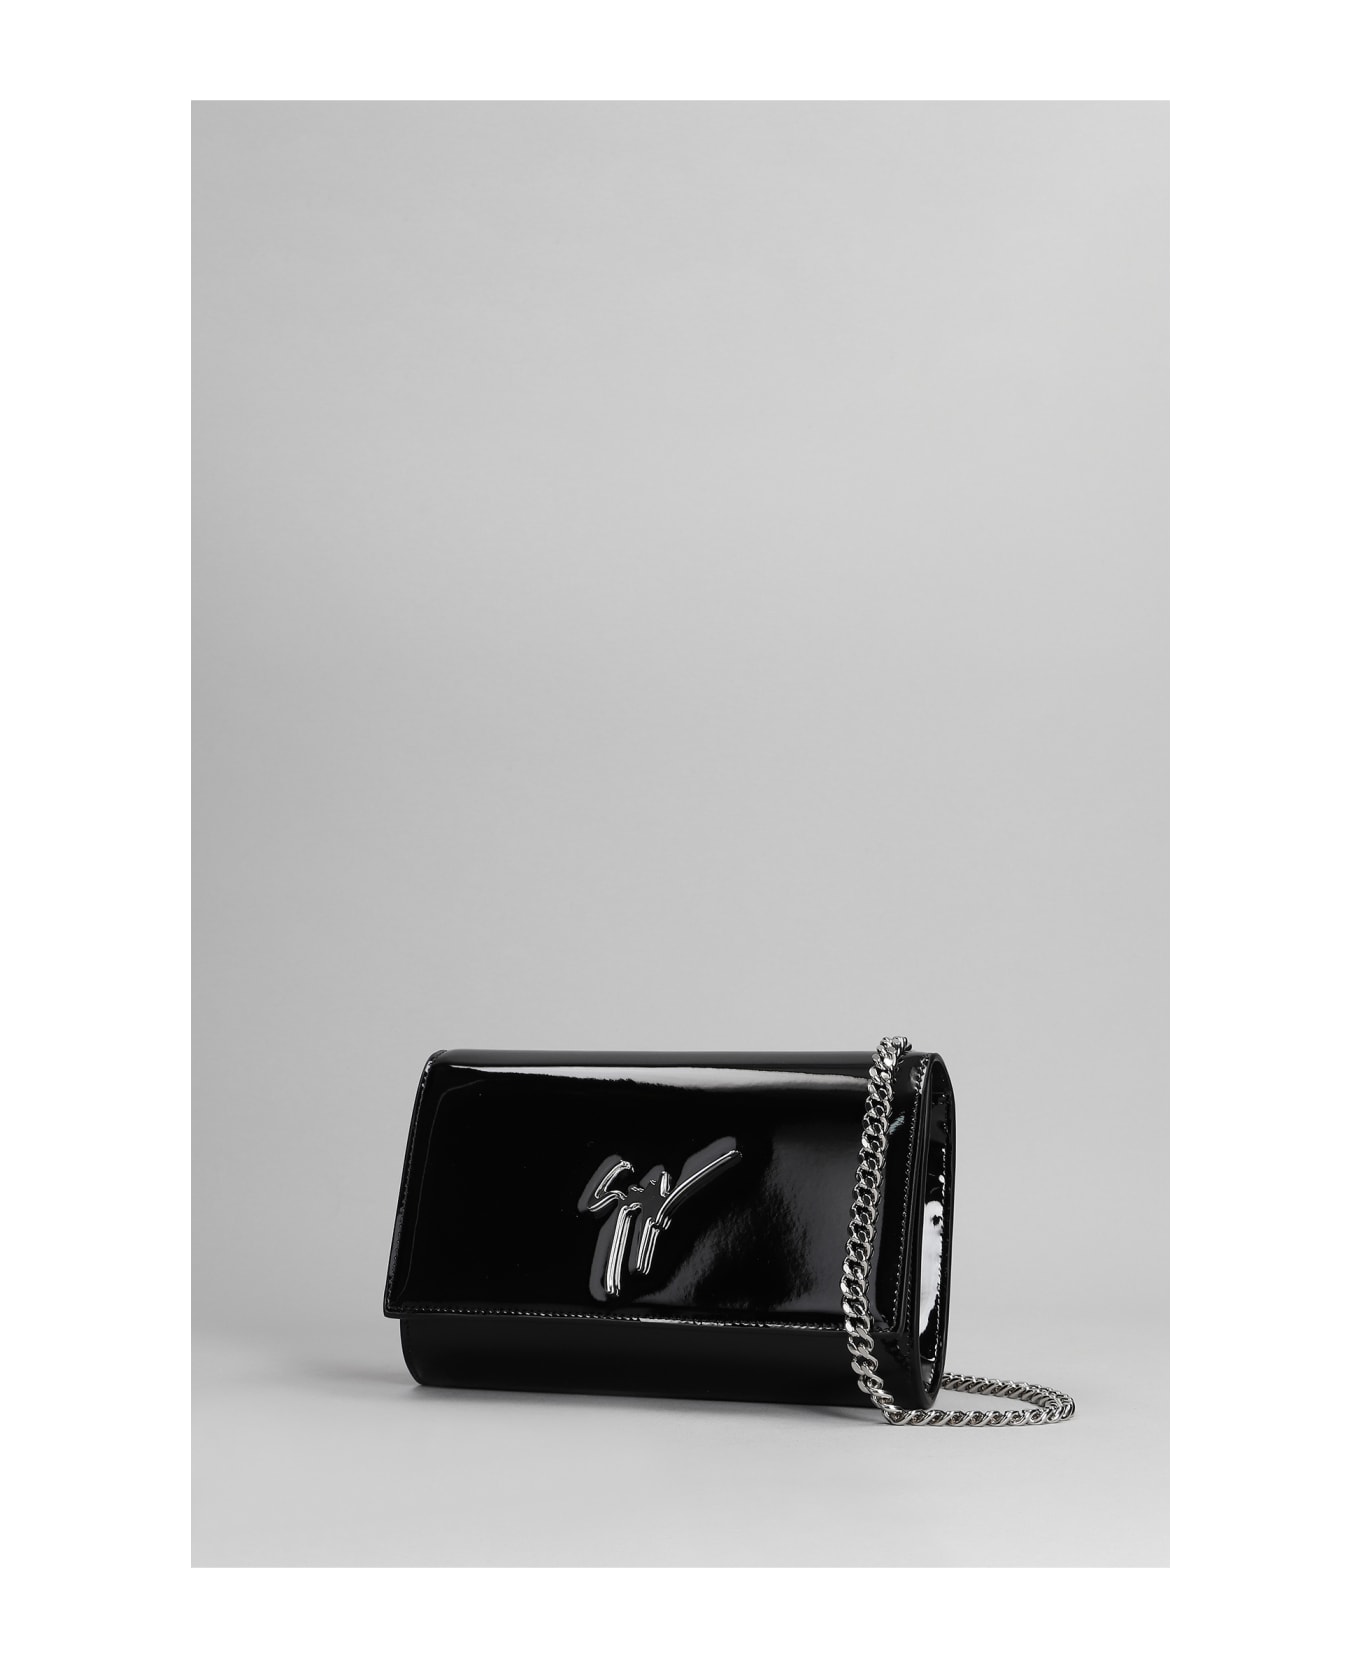 Giuseppe Zanotti Cleopatra Clutch In Black Patent Leather - Black Silver ショルダーバッグ